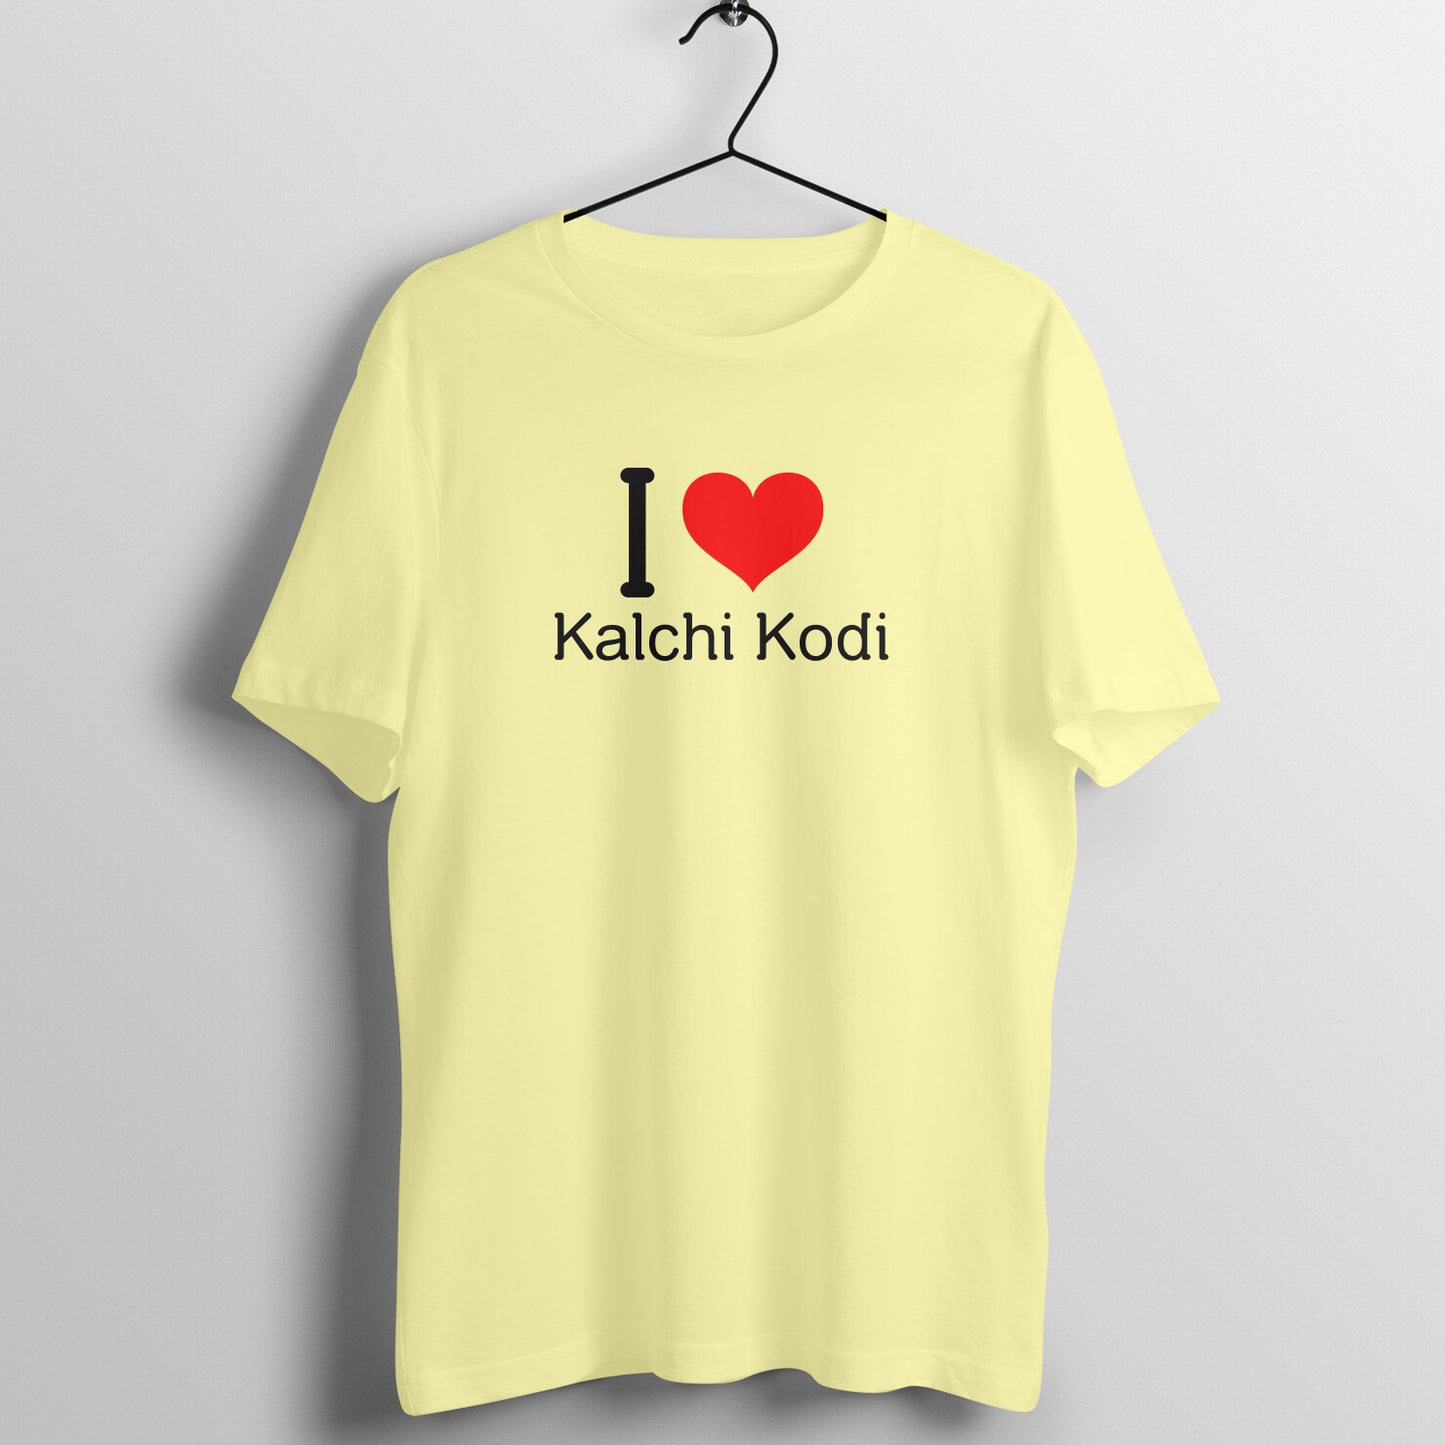 I LOVE KALCHI KODI MEN'S FOOD COLLECTION GENT